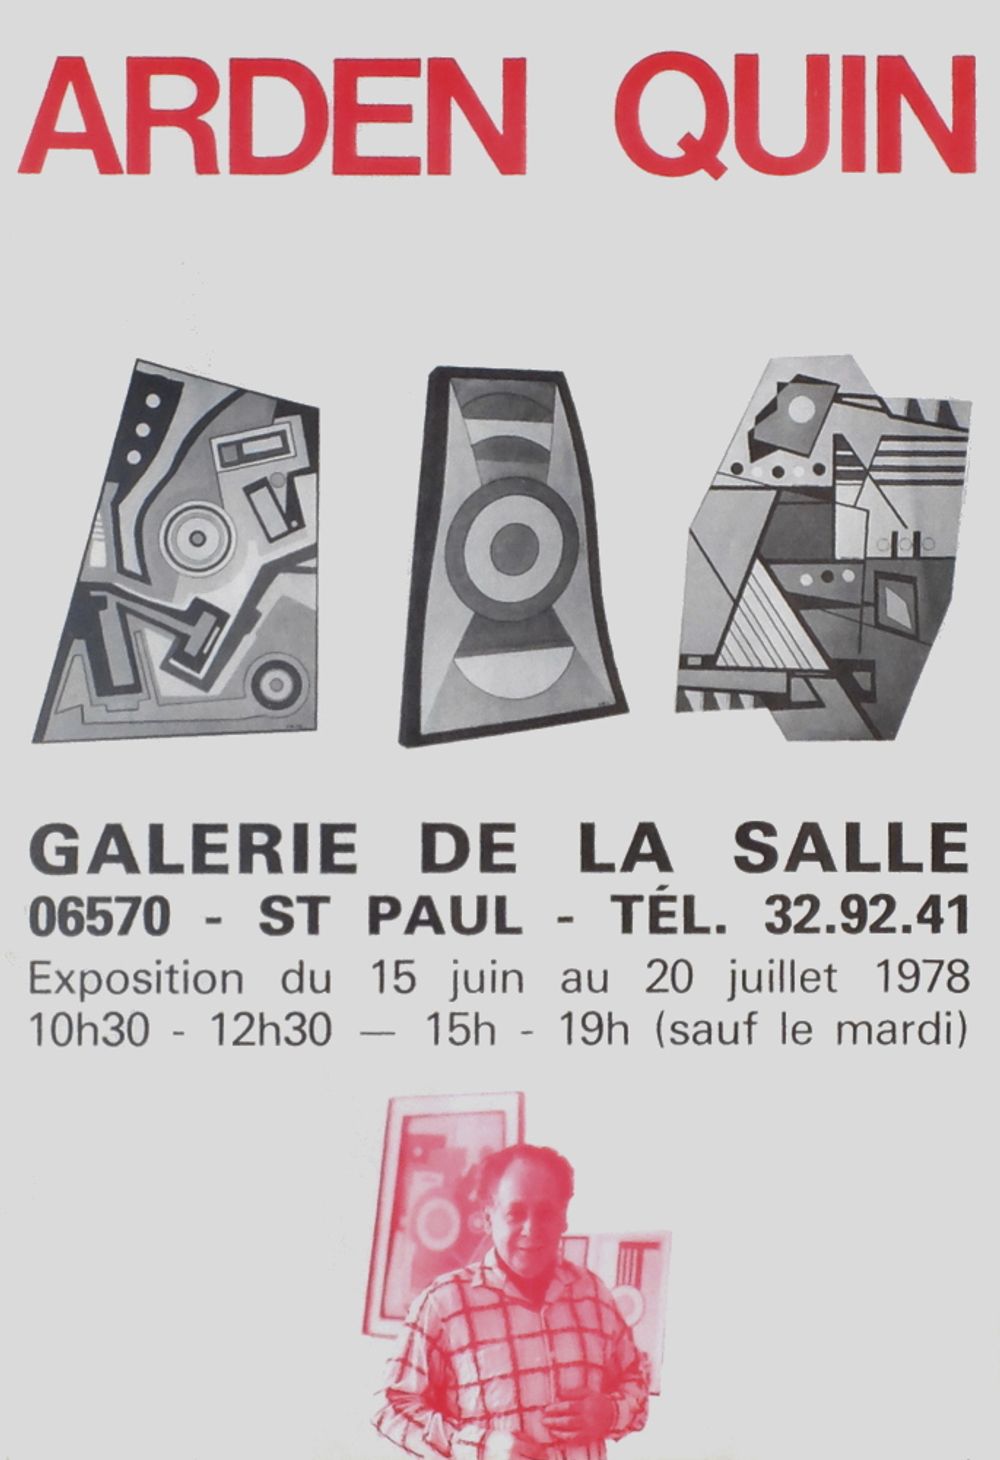 Expo 78 - Galerie De La Salle